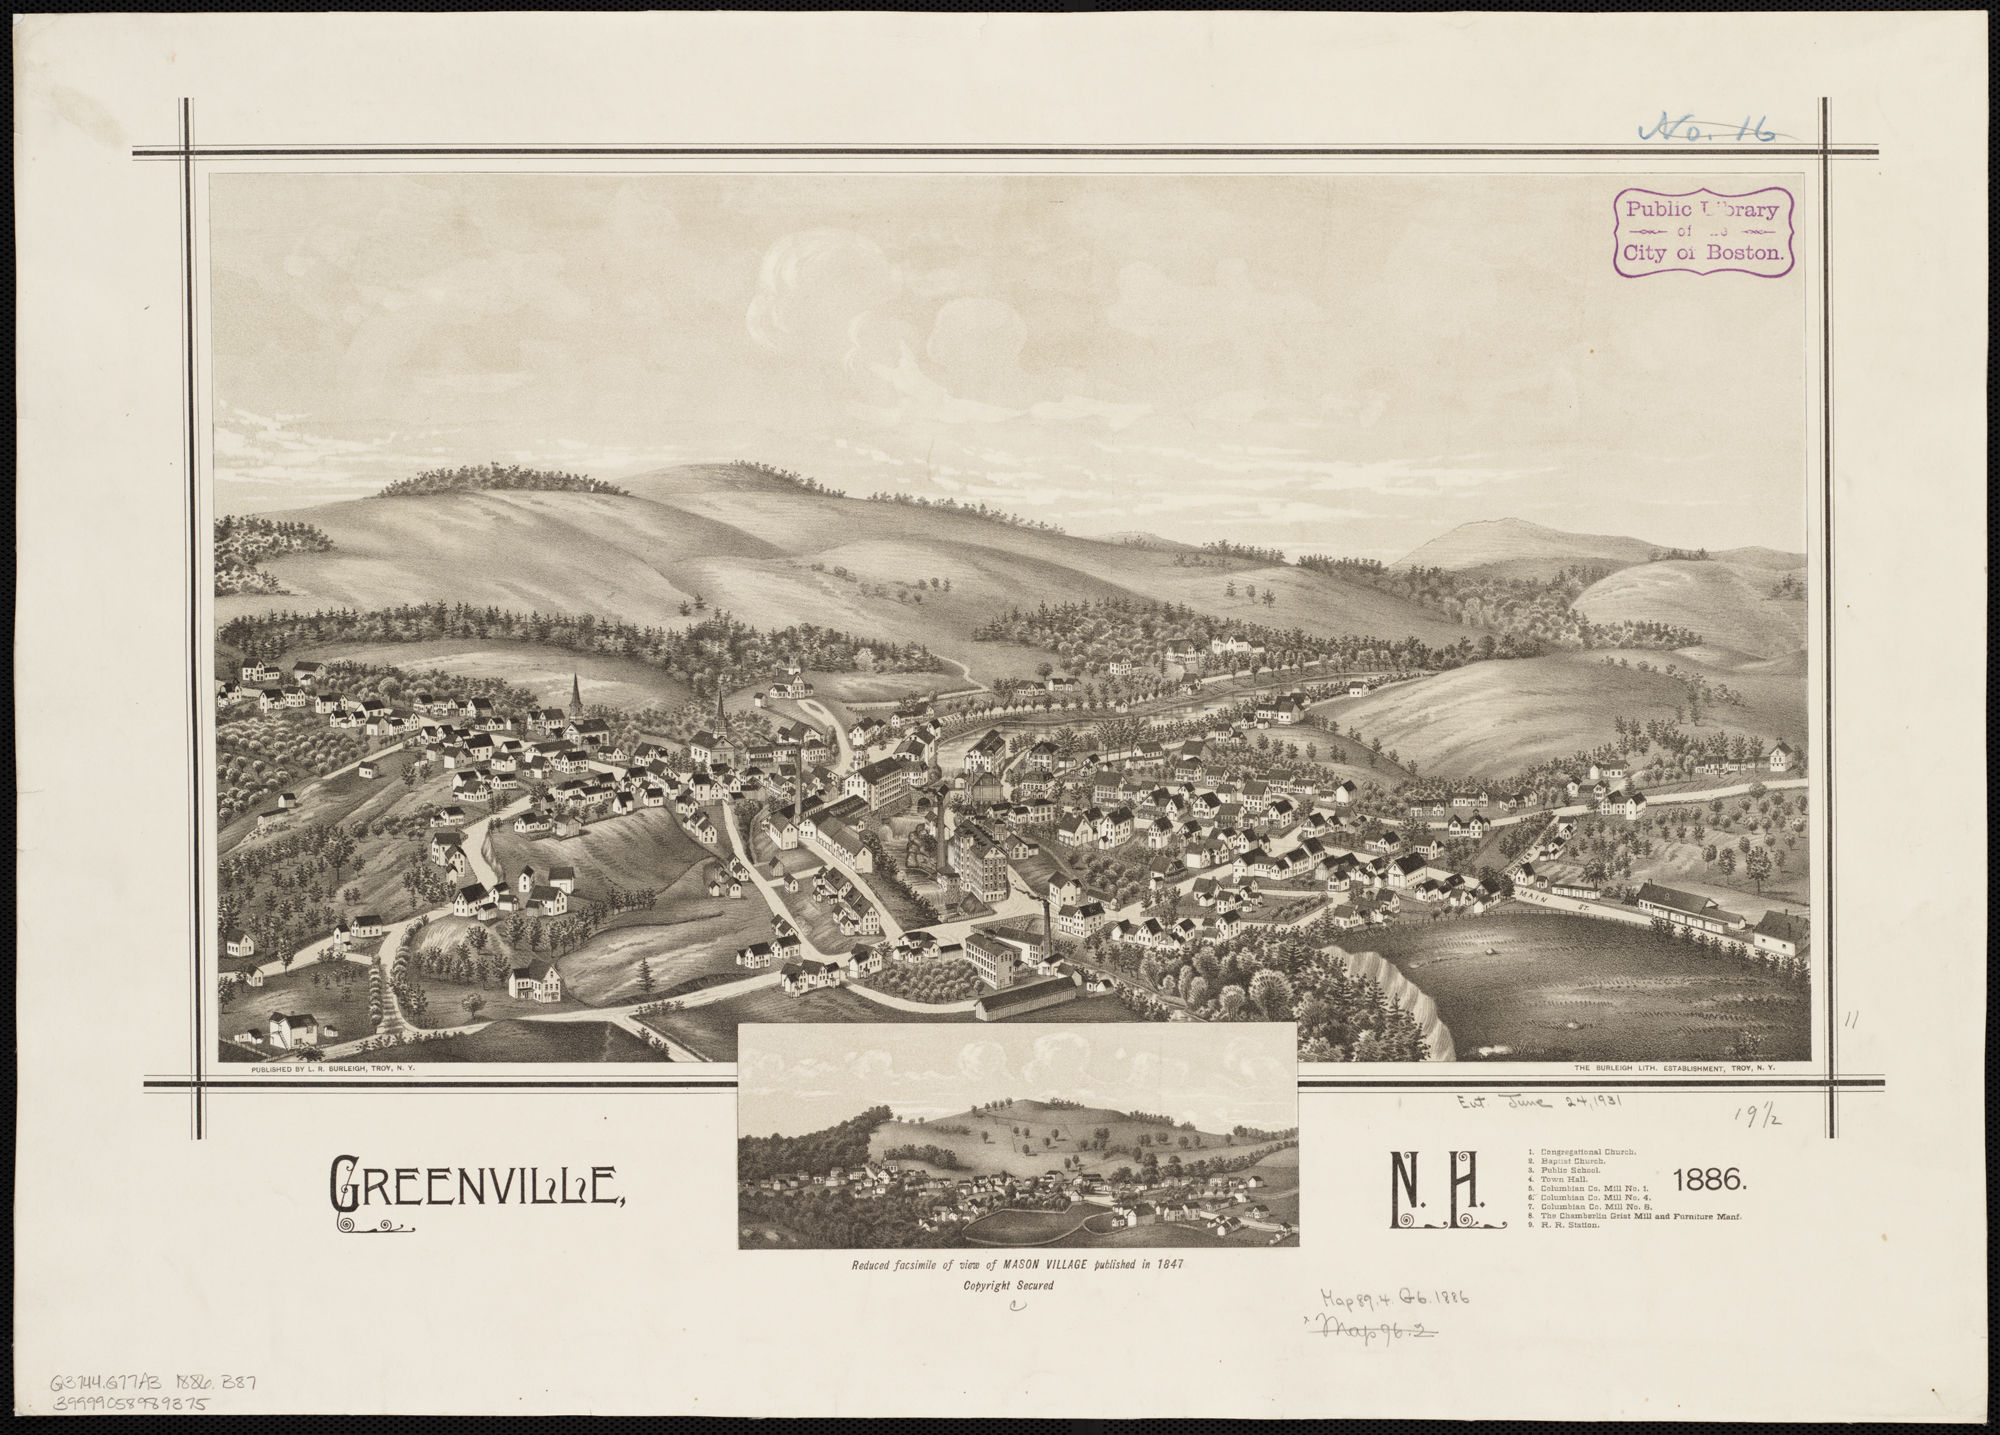 File:Greenville, N.H. (2674998059).jpg - Wikipedia